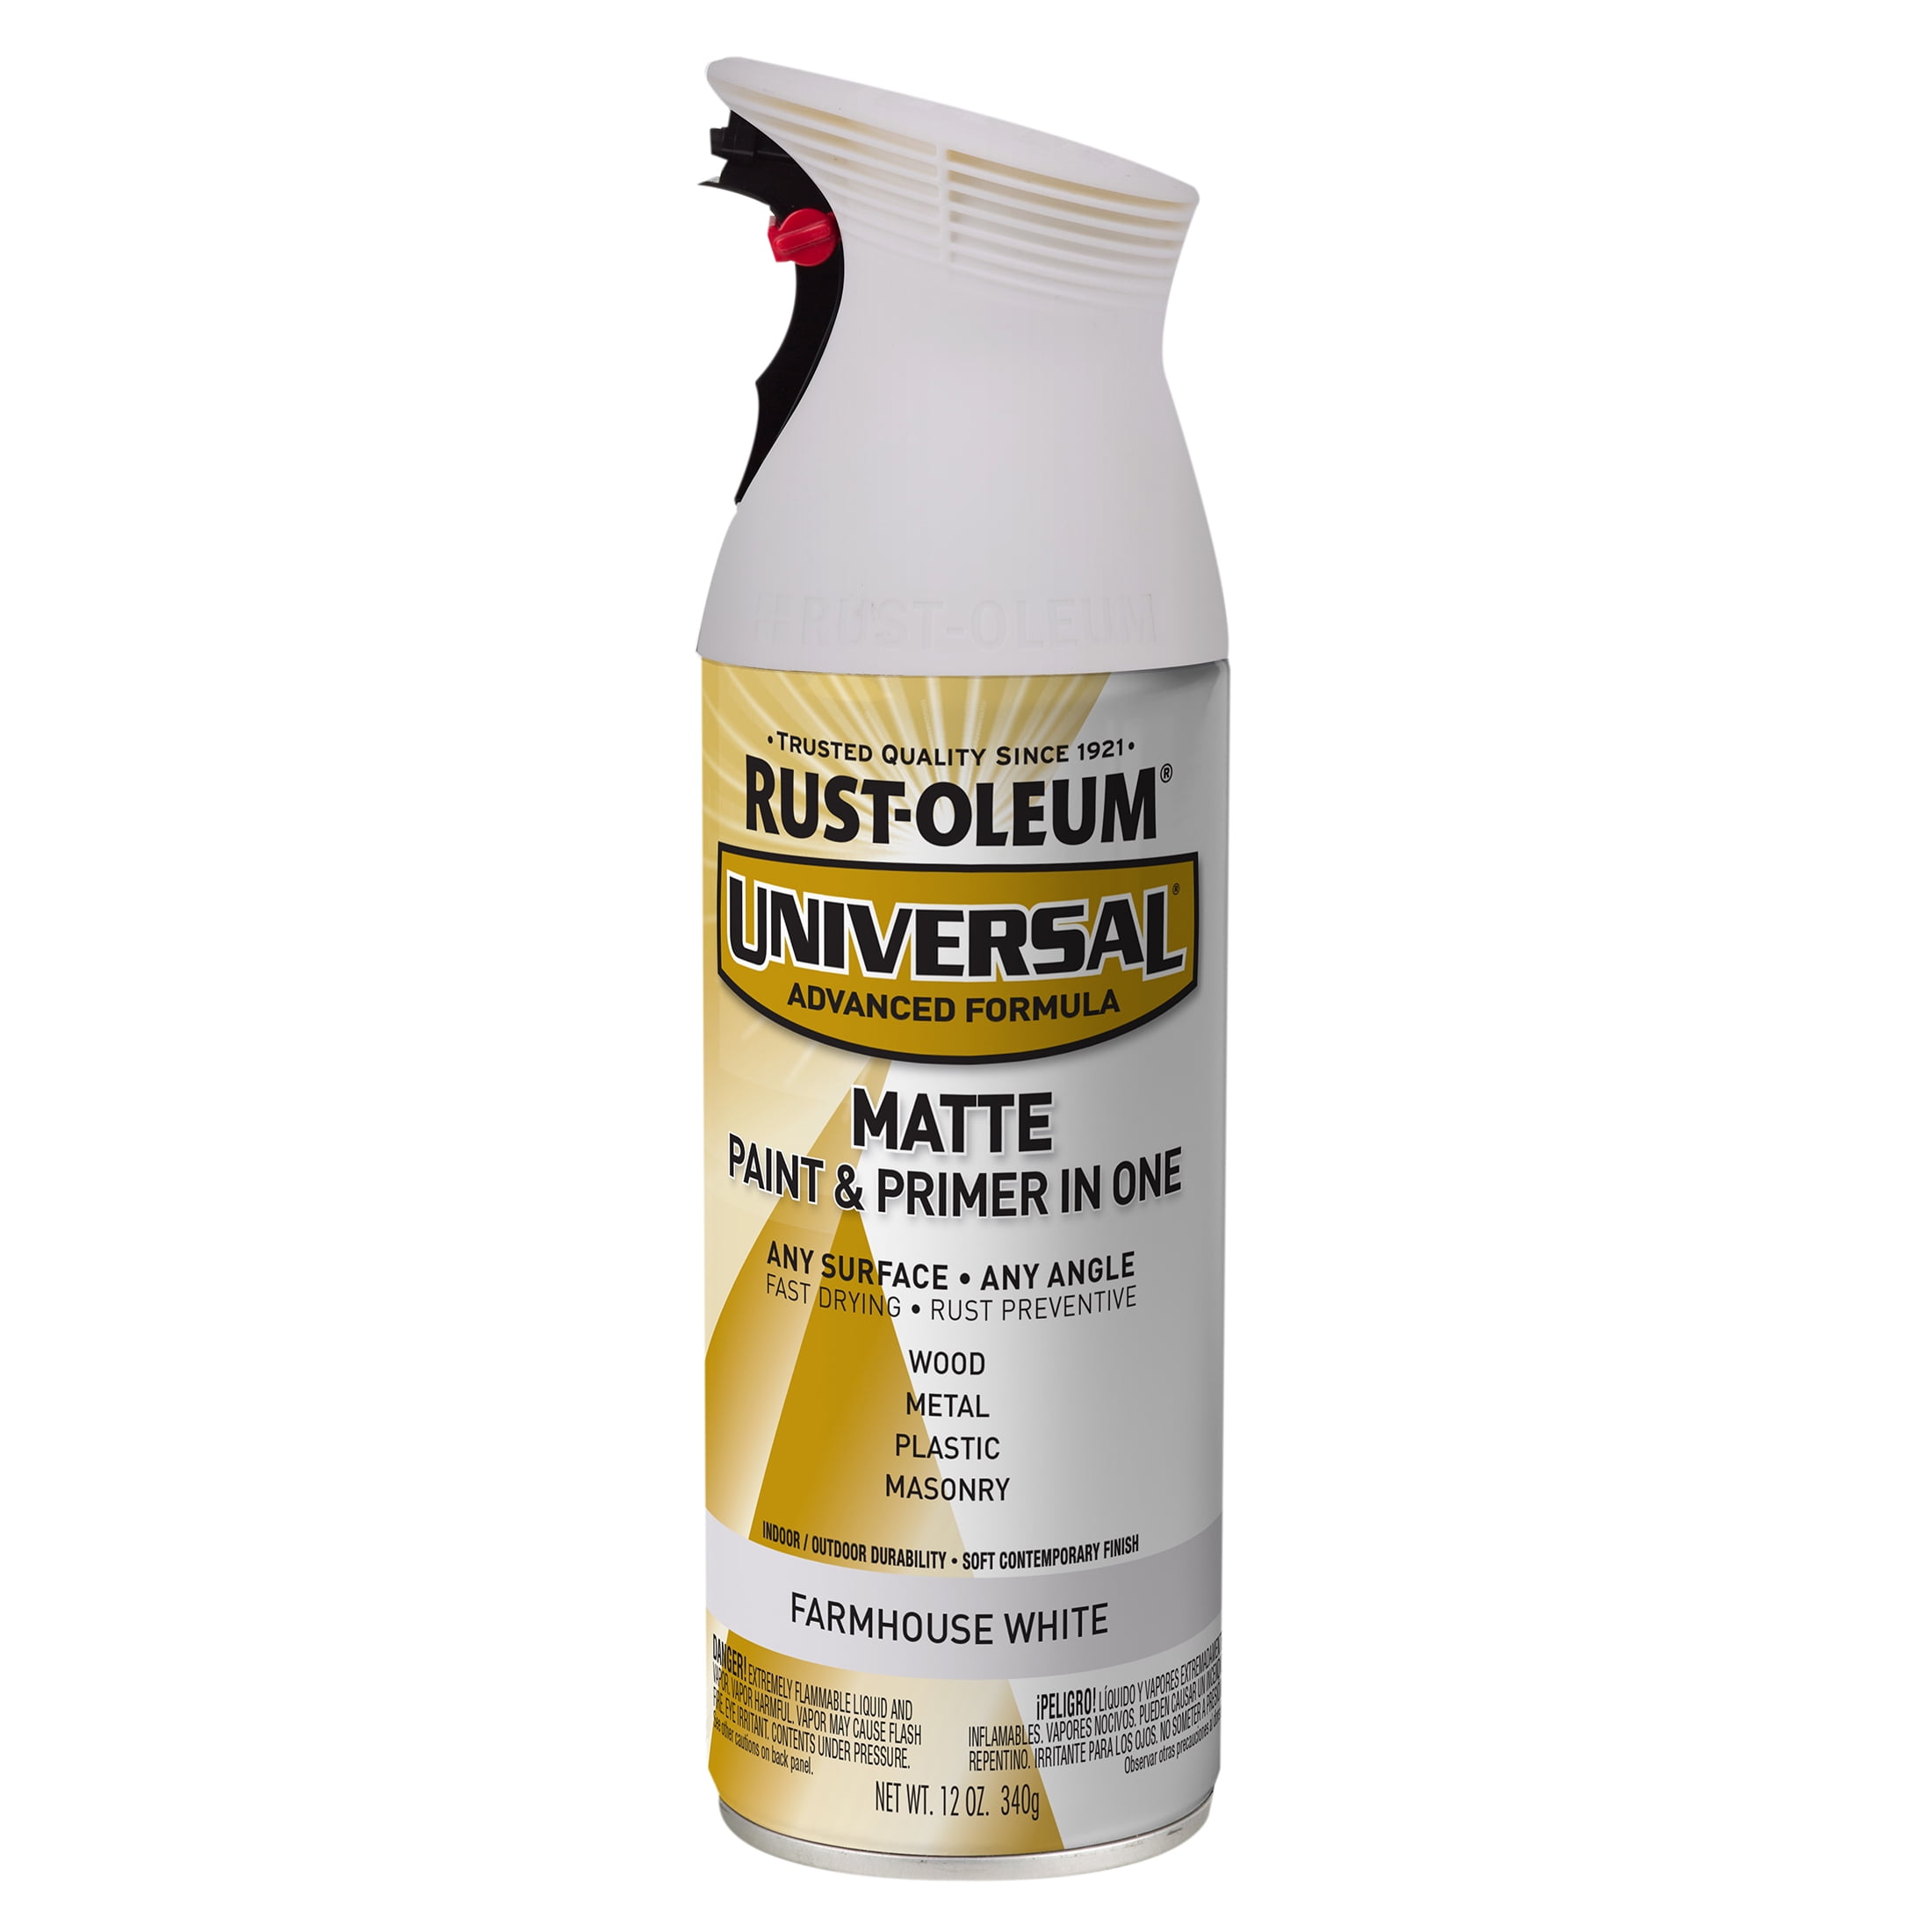 Buy the Rust-Oleum 7870830 Polyurethane, Clear Gloss ~ 11.25 oz Spray Cans